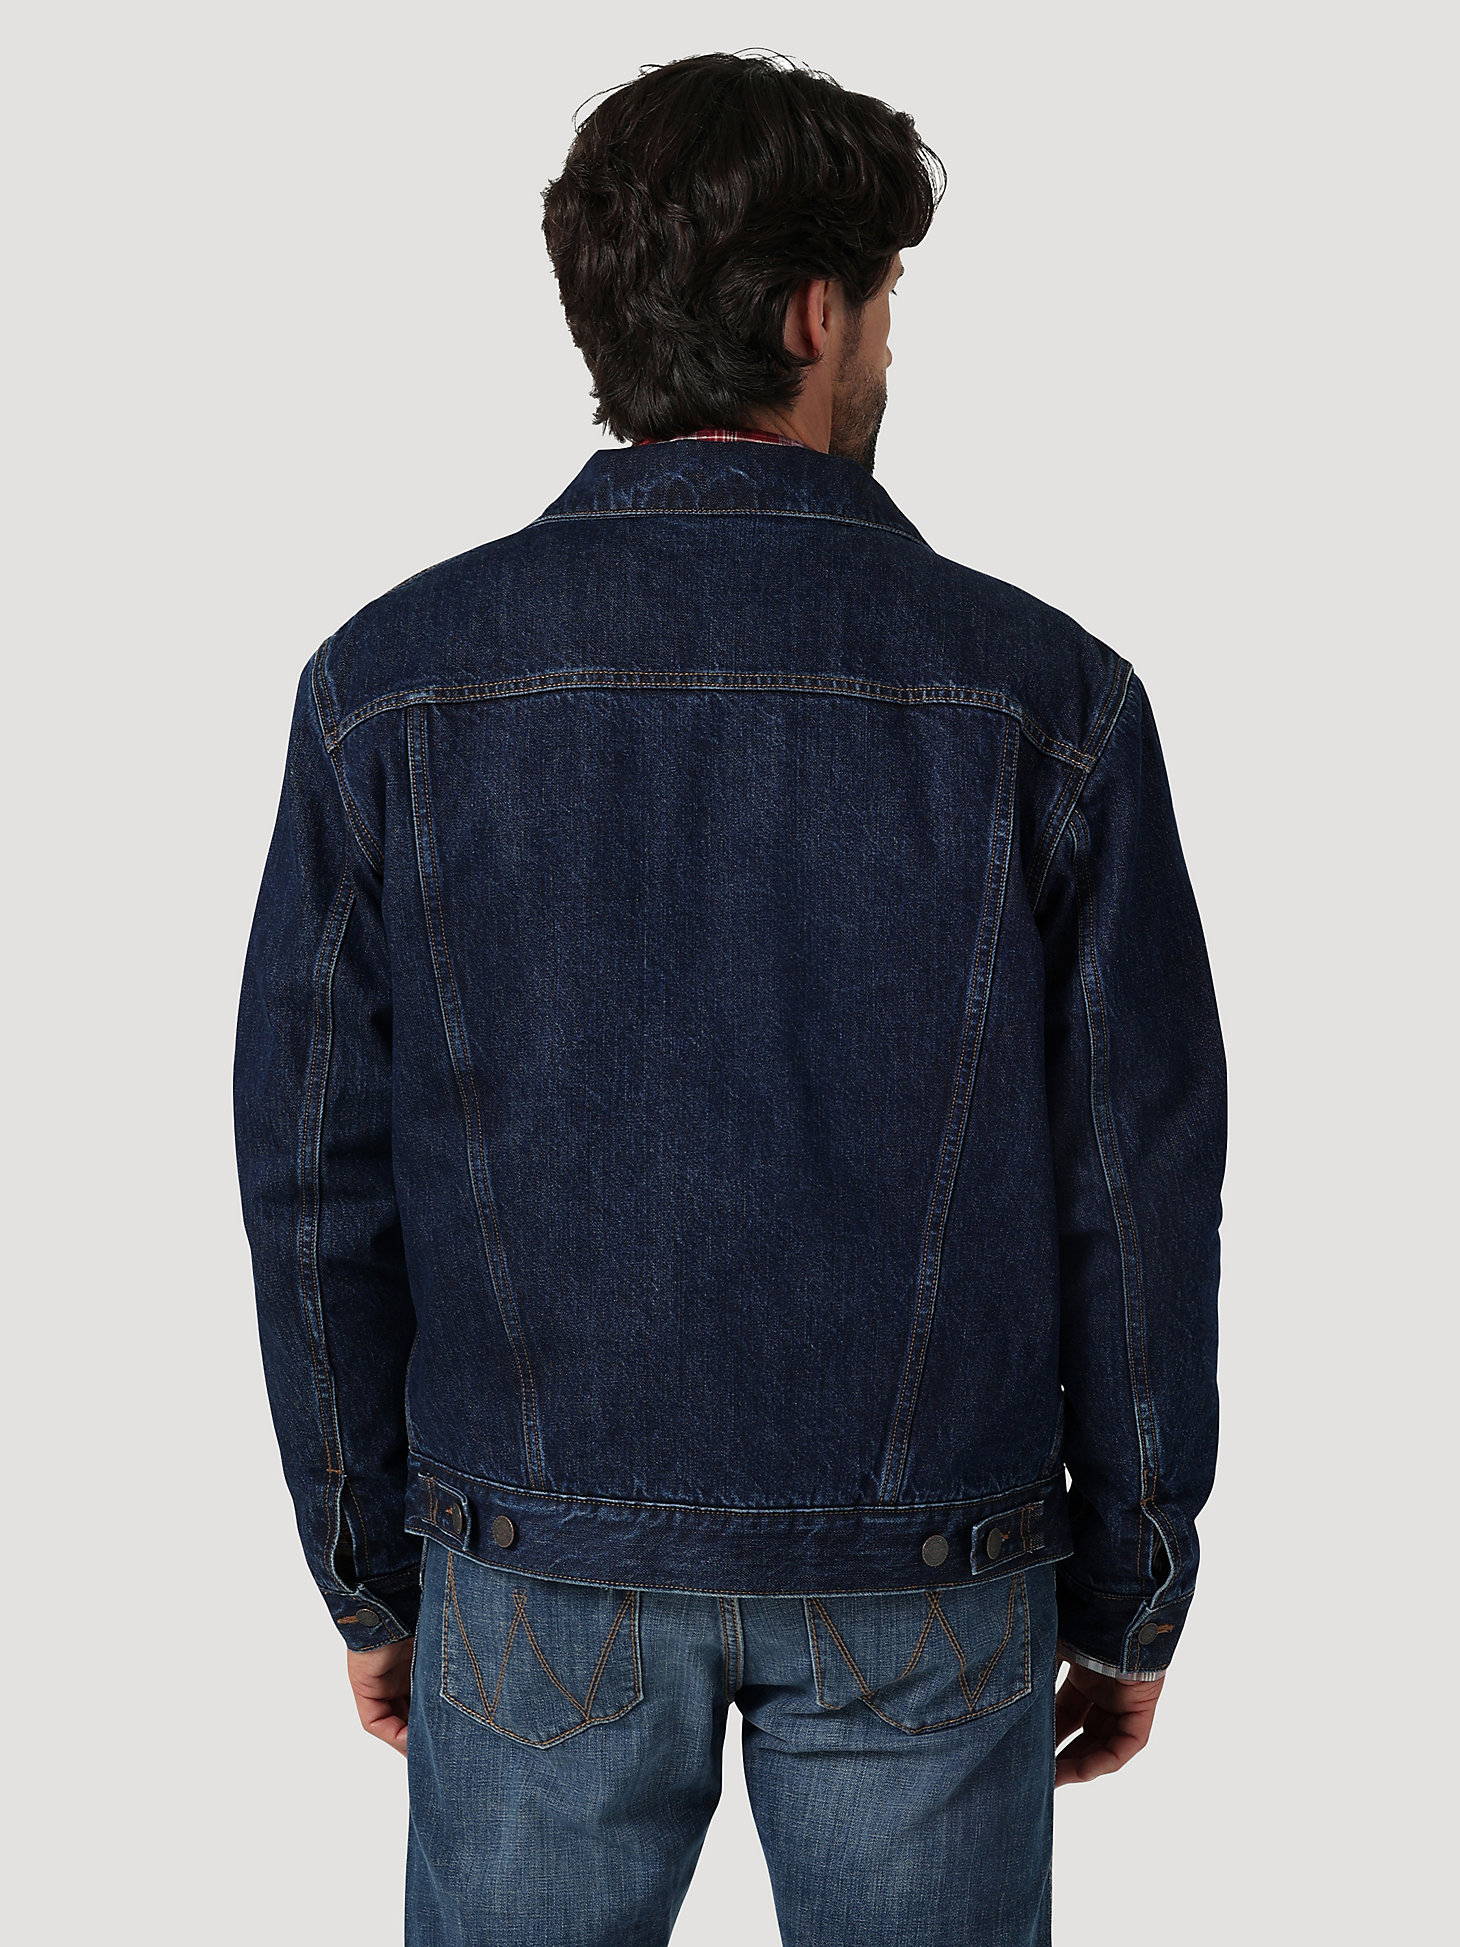 Men's Wrangler® Retro Unlined Denim Jacket in Bella Vista alternative view 1